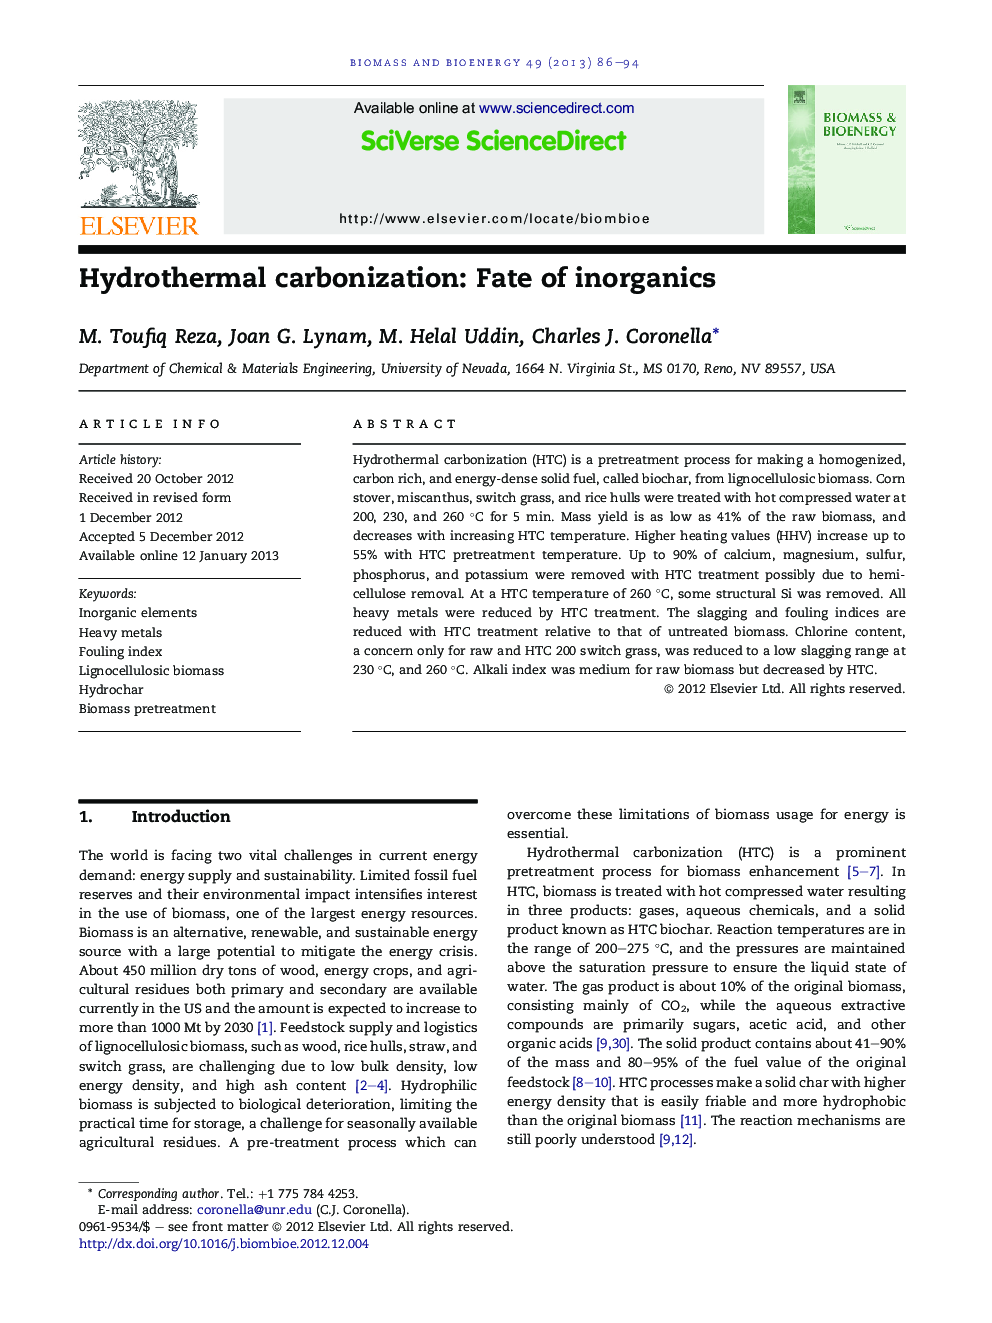 Hydrothermal carbonization: Fate of inorganics